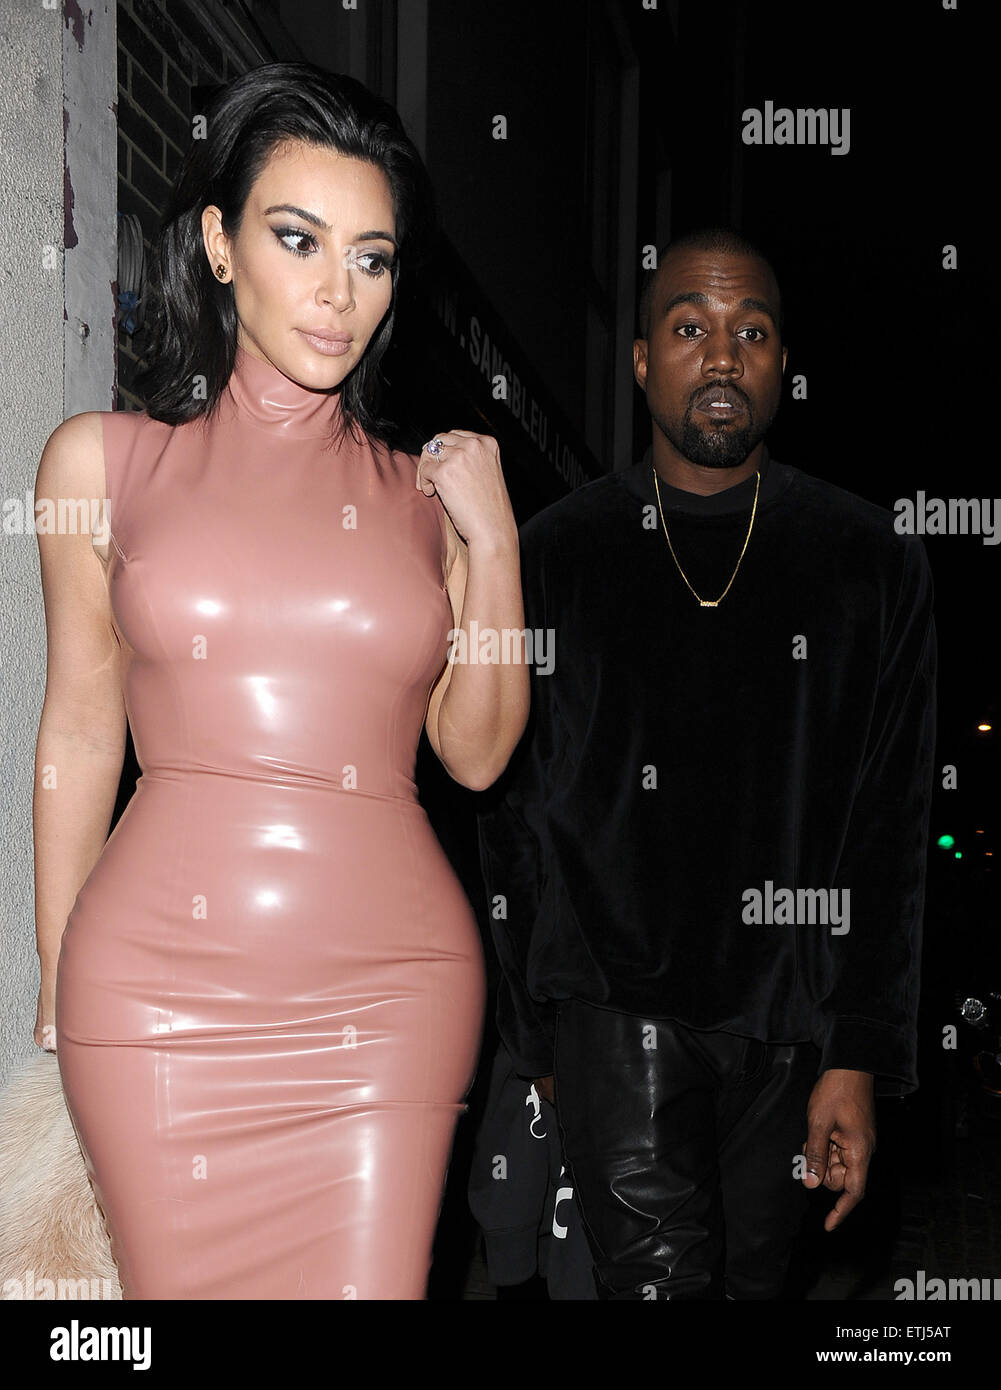 Kim Kardashian And Husband Kanye West Pay A Late Night Visit To The Stock Photo Alamy